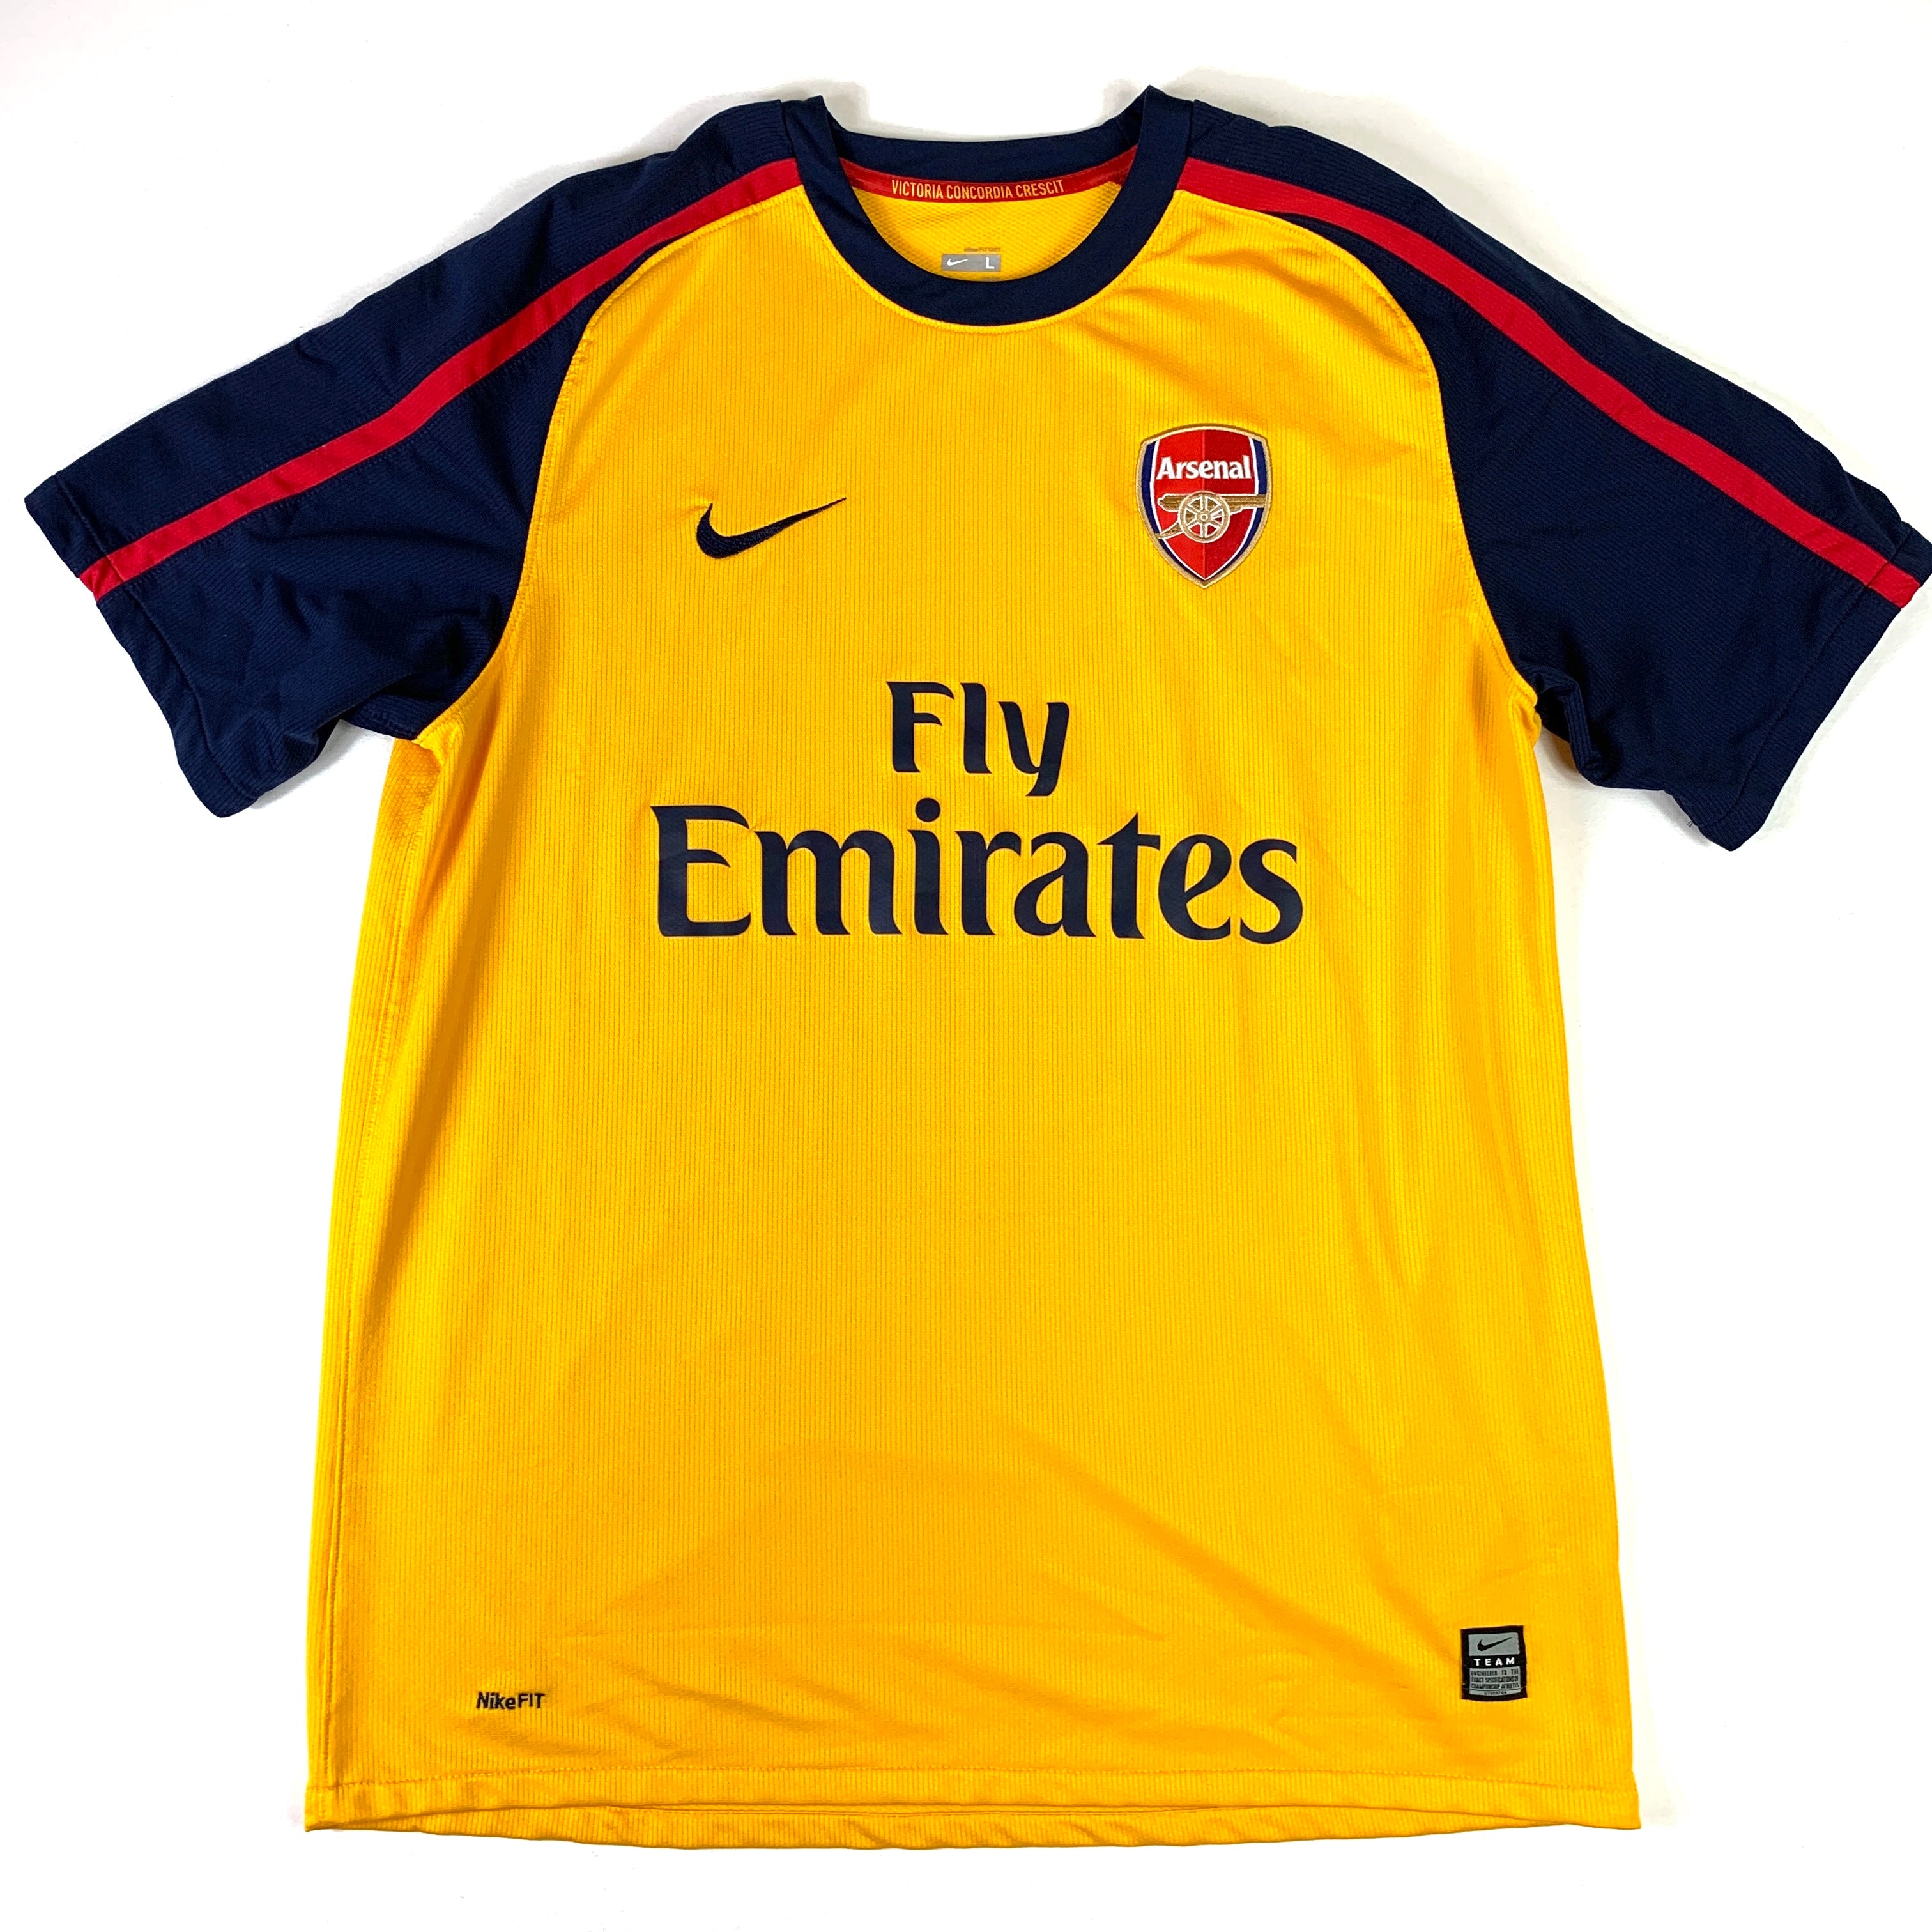 2008/09 Arsenal Away Shirt - Adult L | eBay